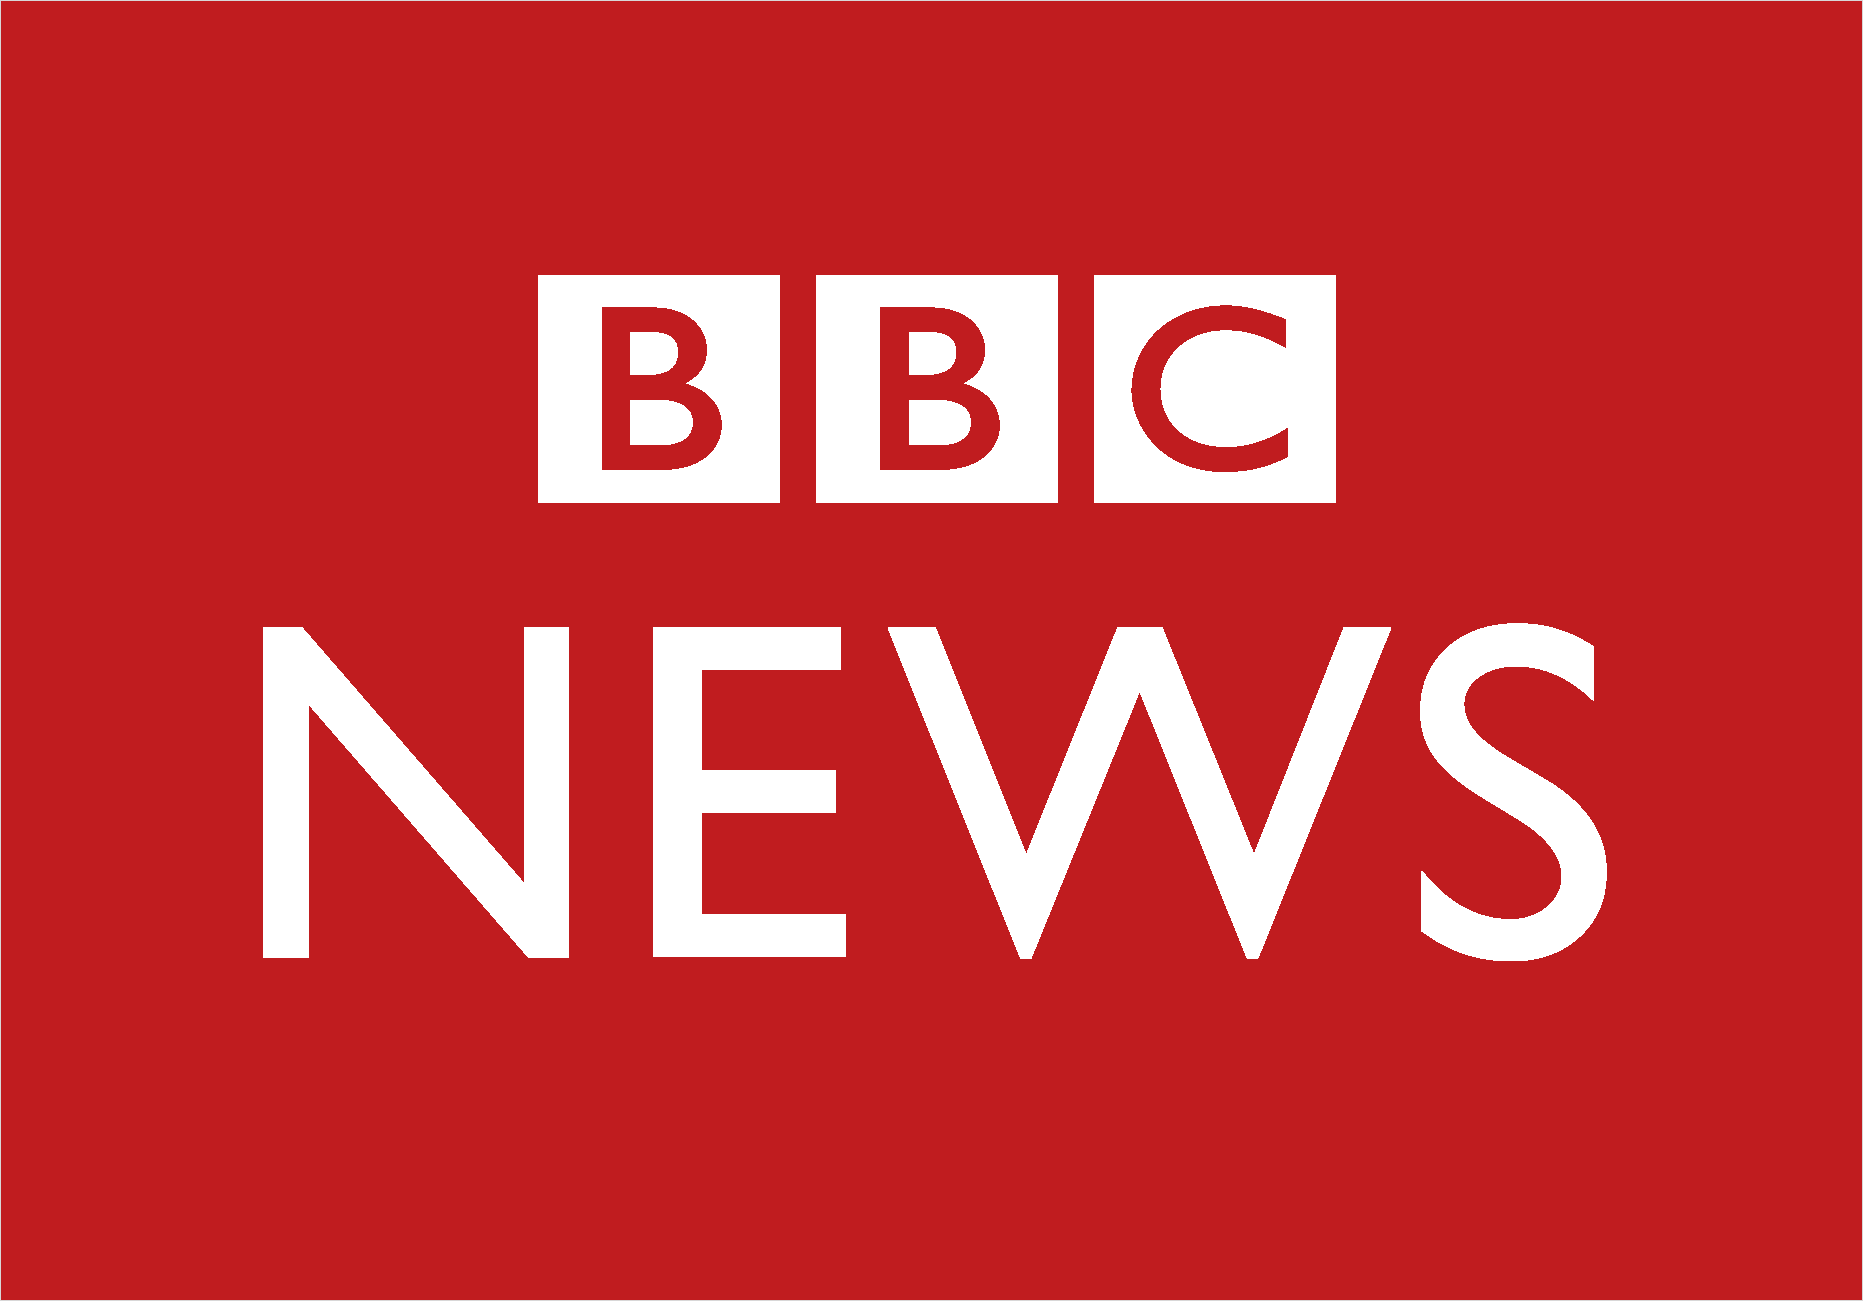 BBC news logo - IMD Business School